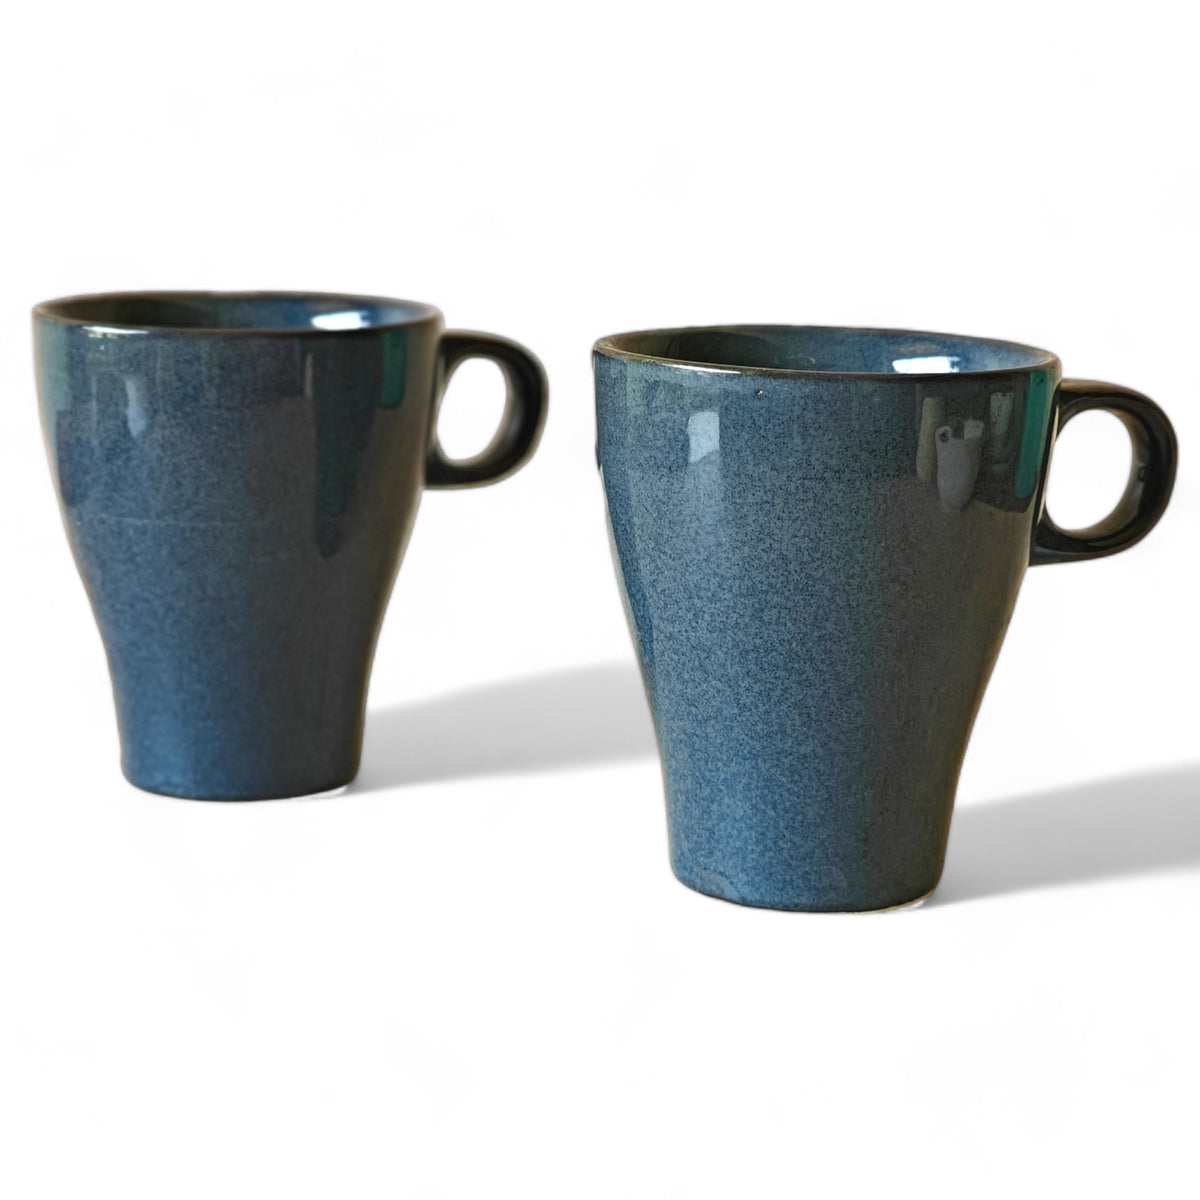 Claymistry Long Mug Combo | Set of 2| Black Glossy Sleak Mugs | Coffee Mugs | Tea Kettles | Ceramic Combos